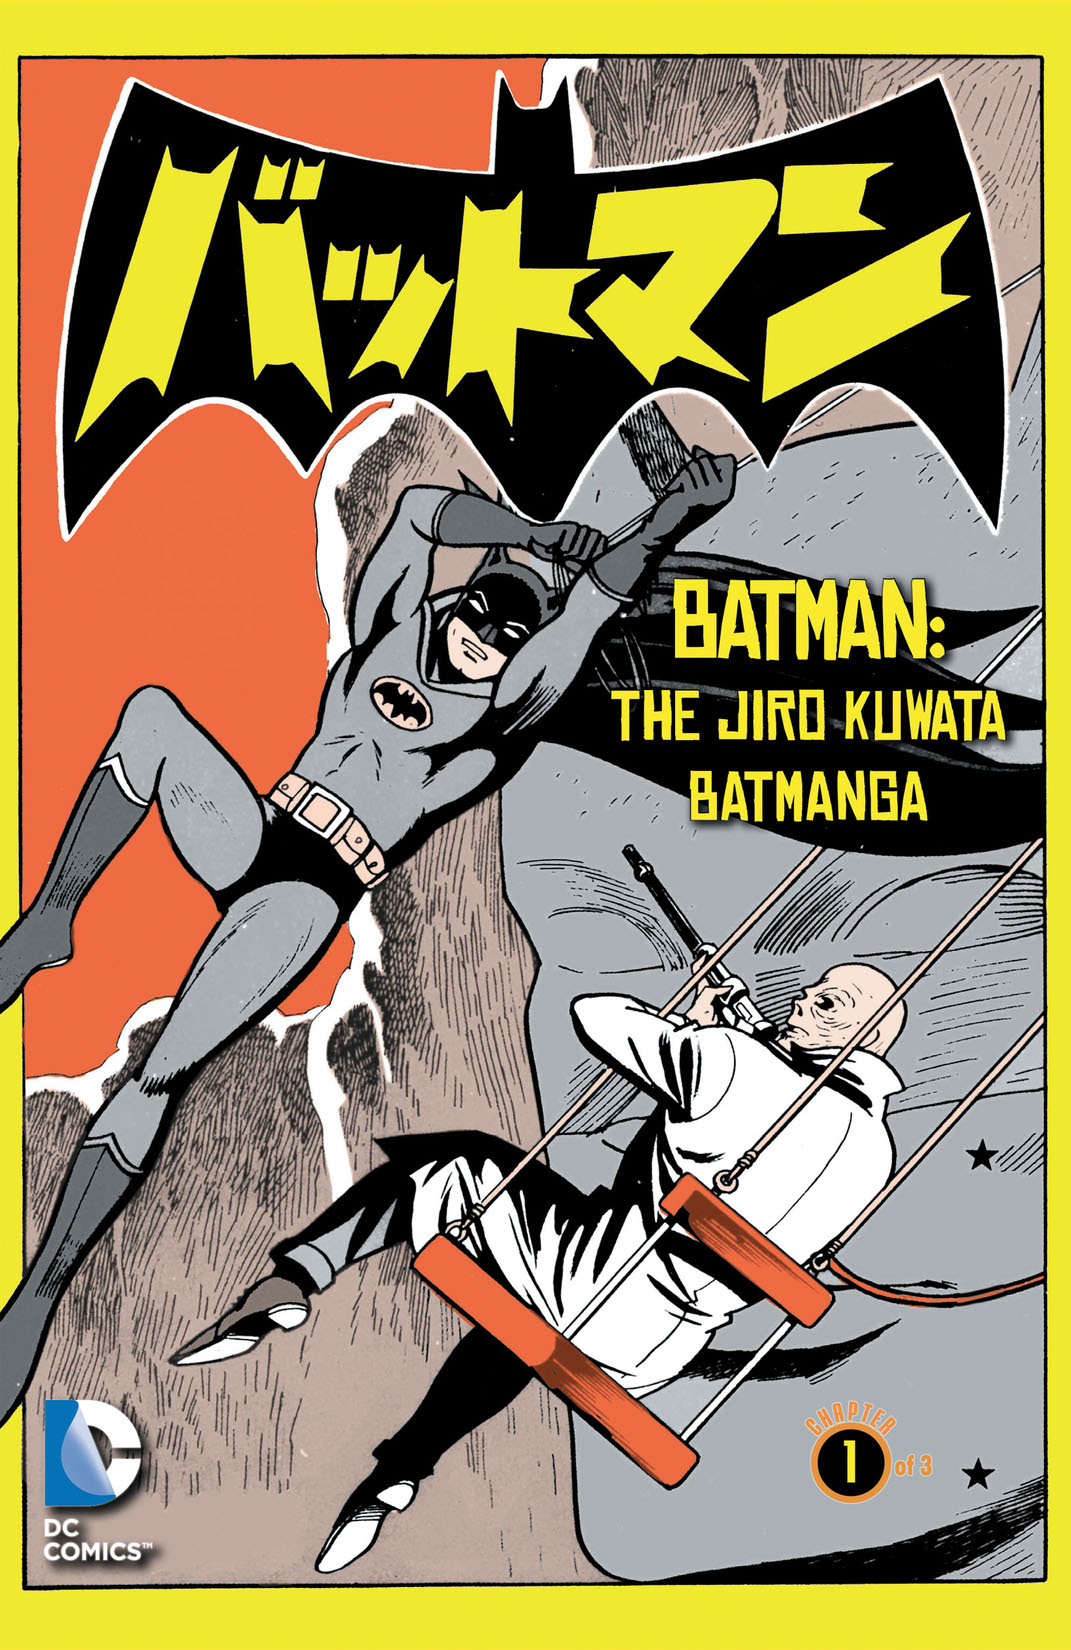 Batman: The Jiro Kuwata Batmanga #4 preview images